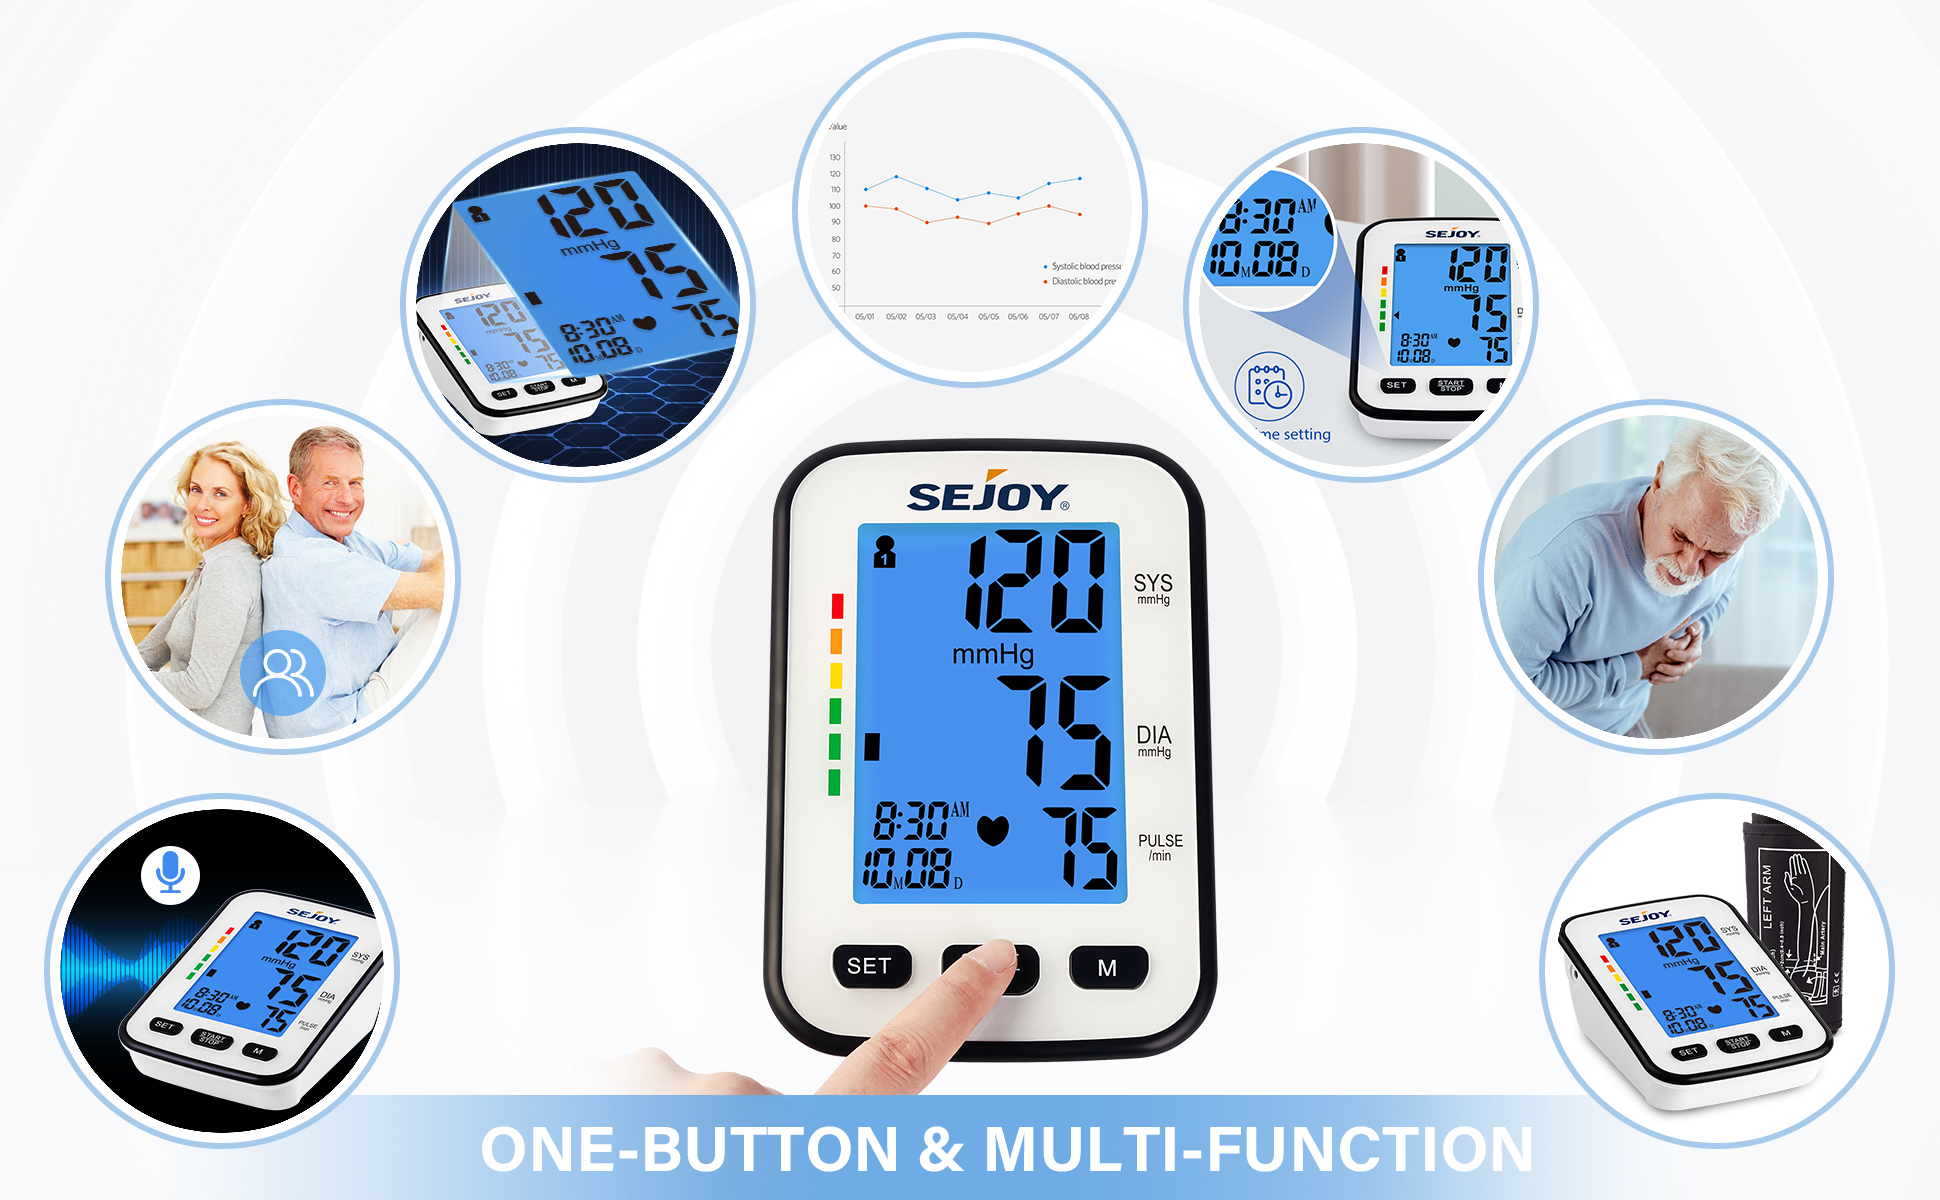 23.03.03 DBP-1332 arm blood pressure monitor